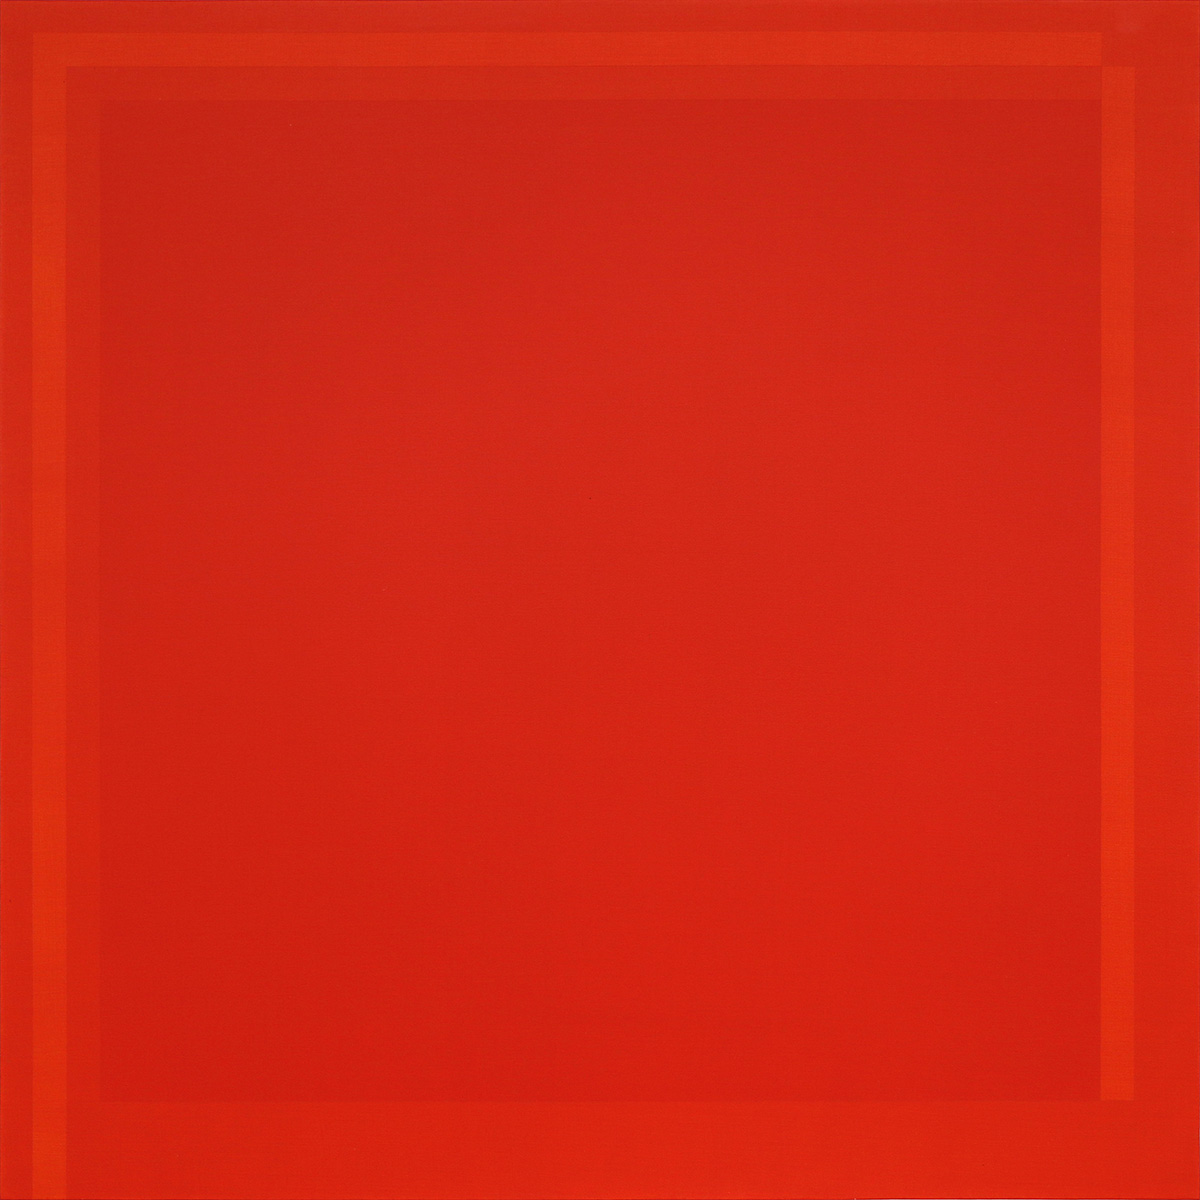 Dimensionsl painting Orange, 200790 x 90 cmAcrylic on canvas, on wood